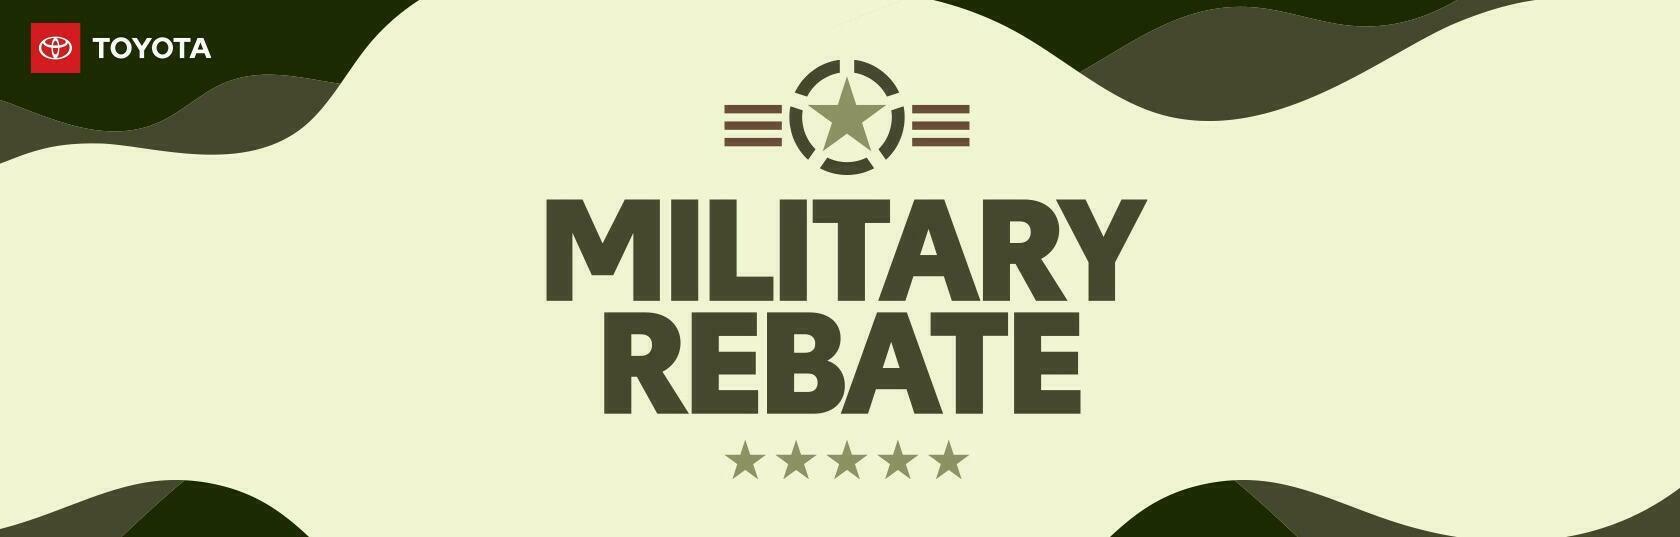 Military Rebate Program Hendrick Toyota Apex Near Durham NC